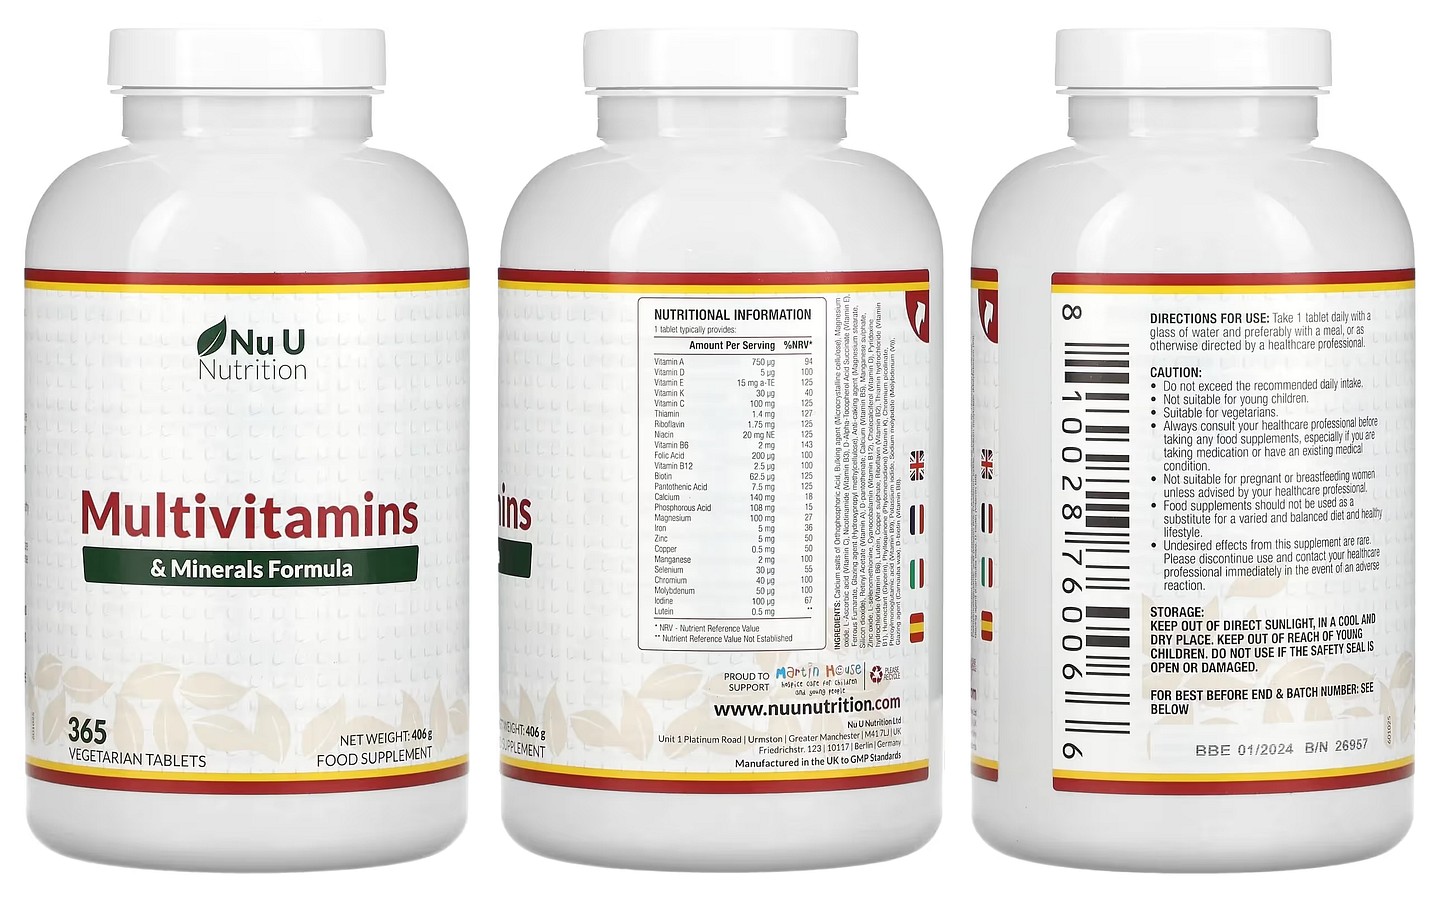 Nu U Nutrition, Multivitamins & Minerals Formula packaging